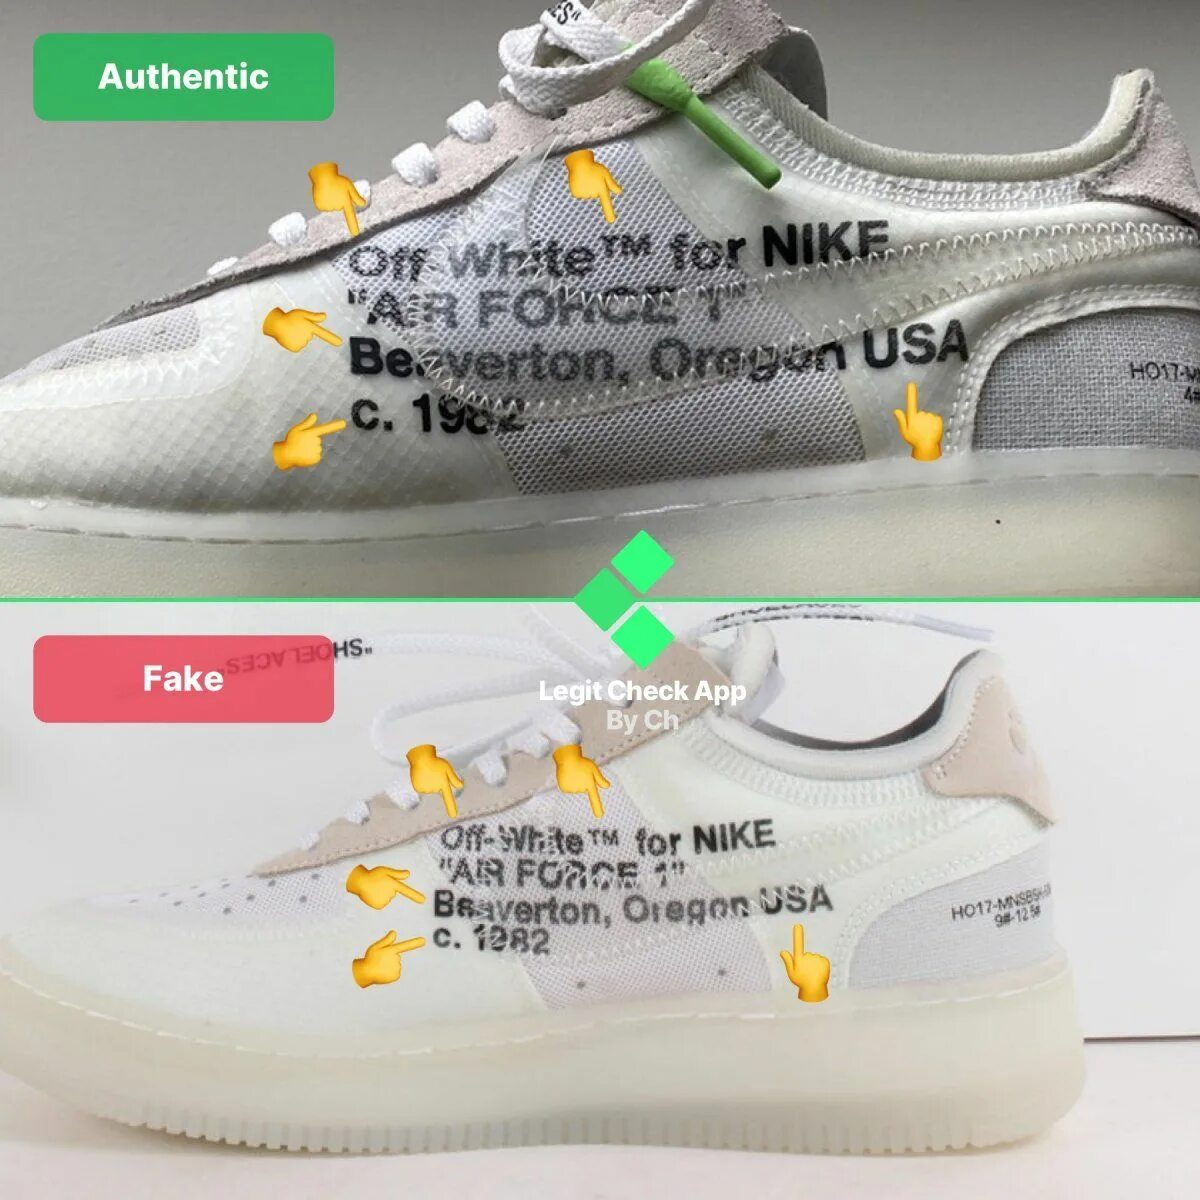 Nike Air Force 1 off White White legit check. Nike af 1 fake vs real. Nike Air Force legit check.